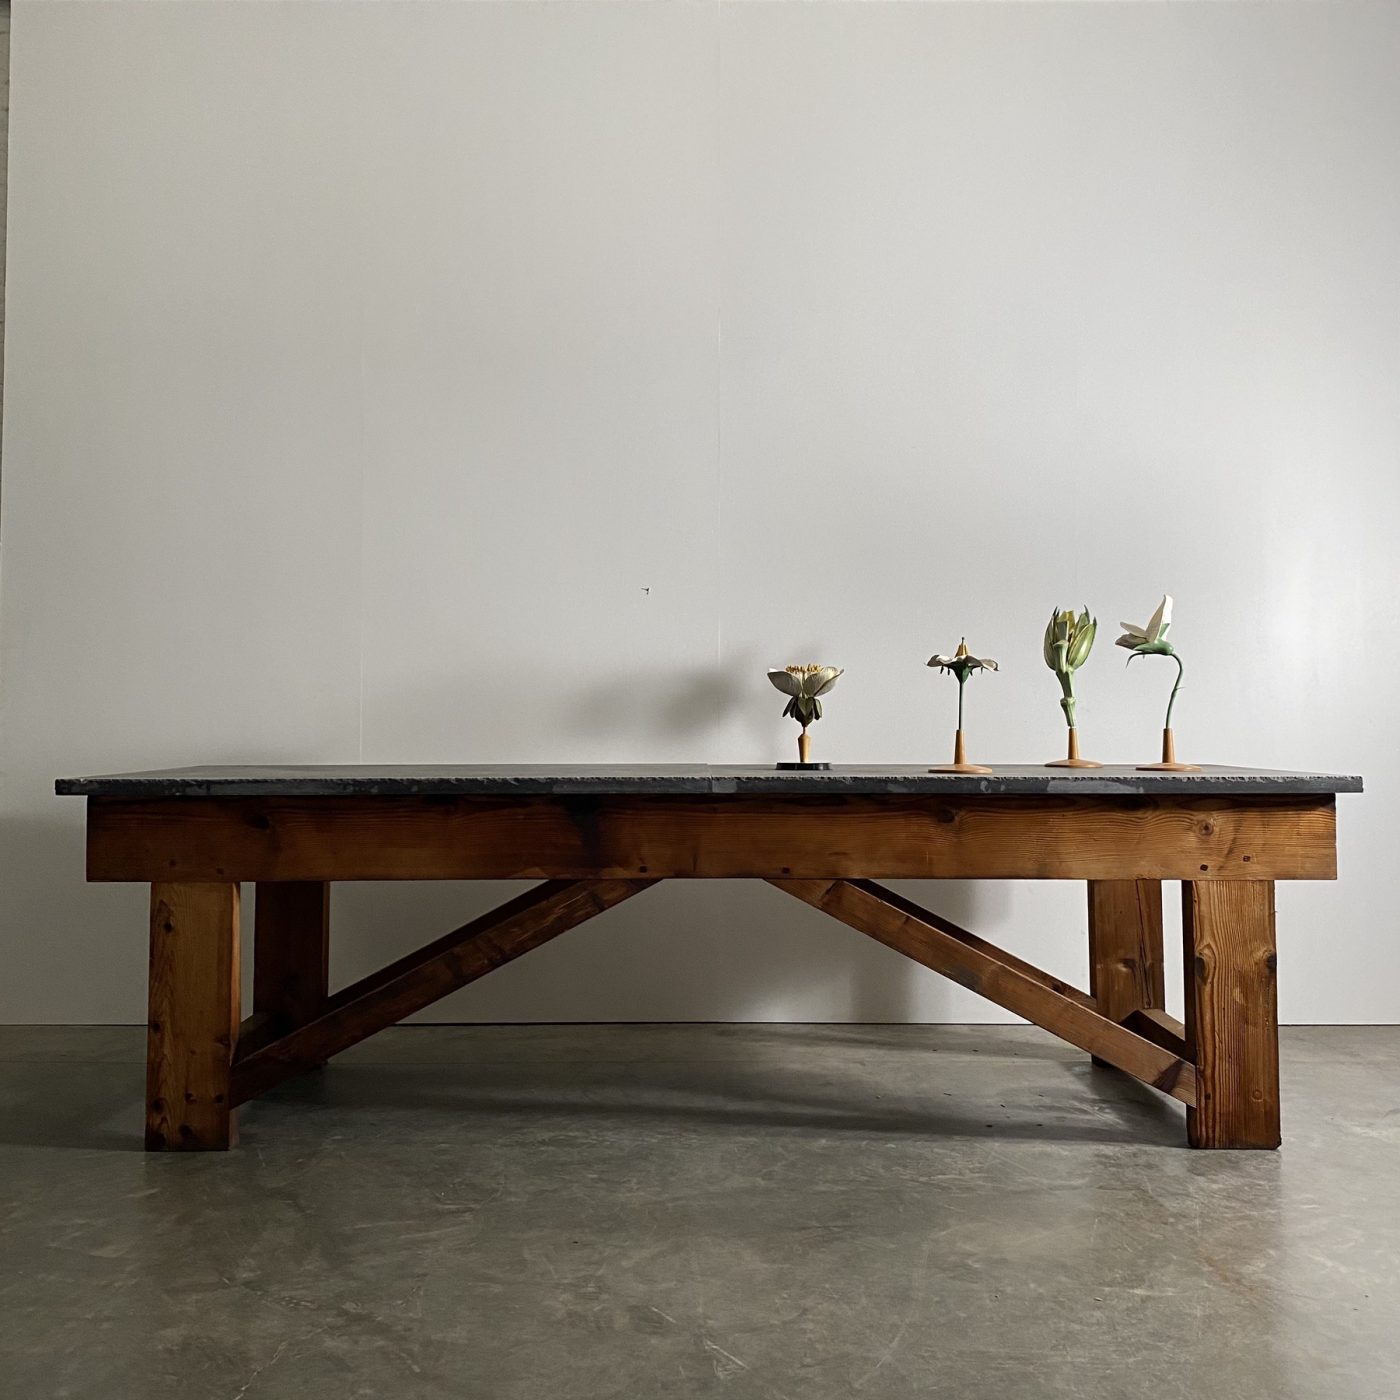 objet-vagabond-stone-table0005